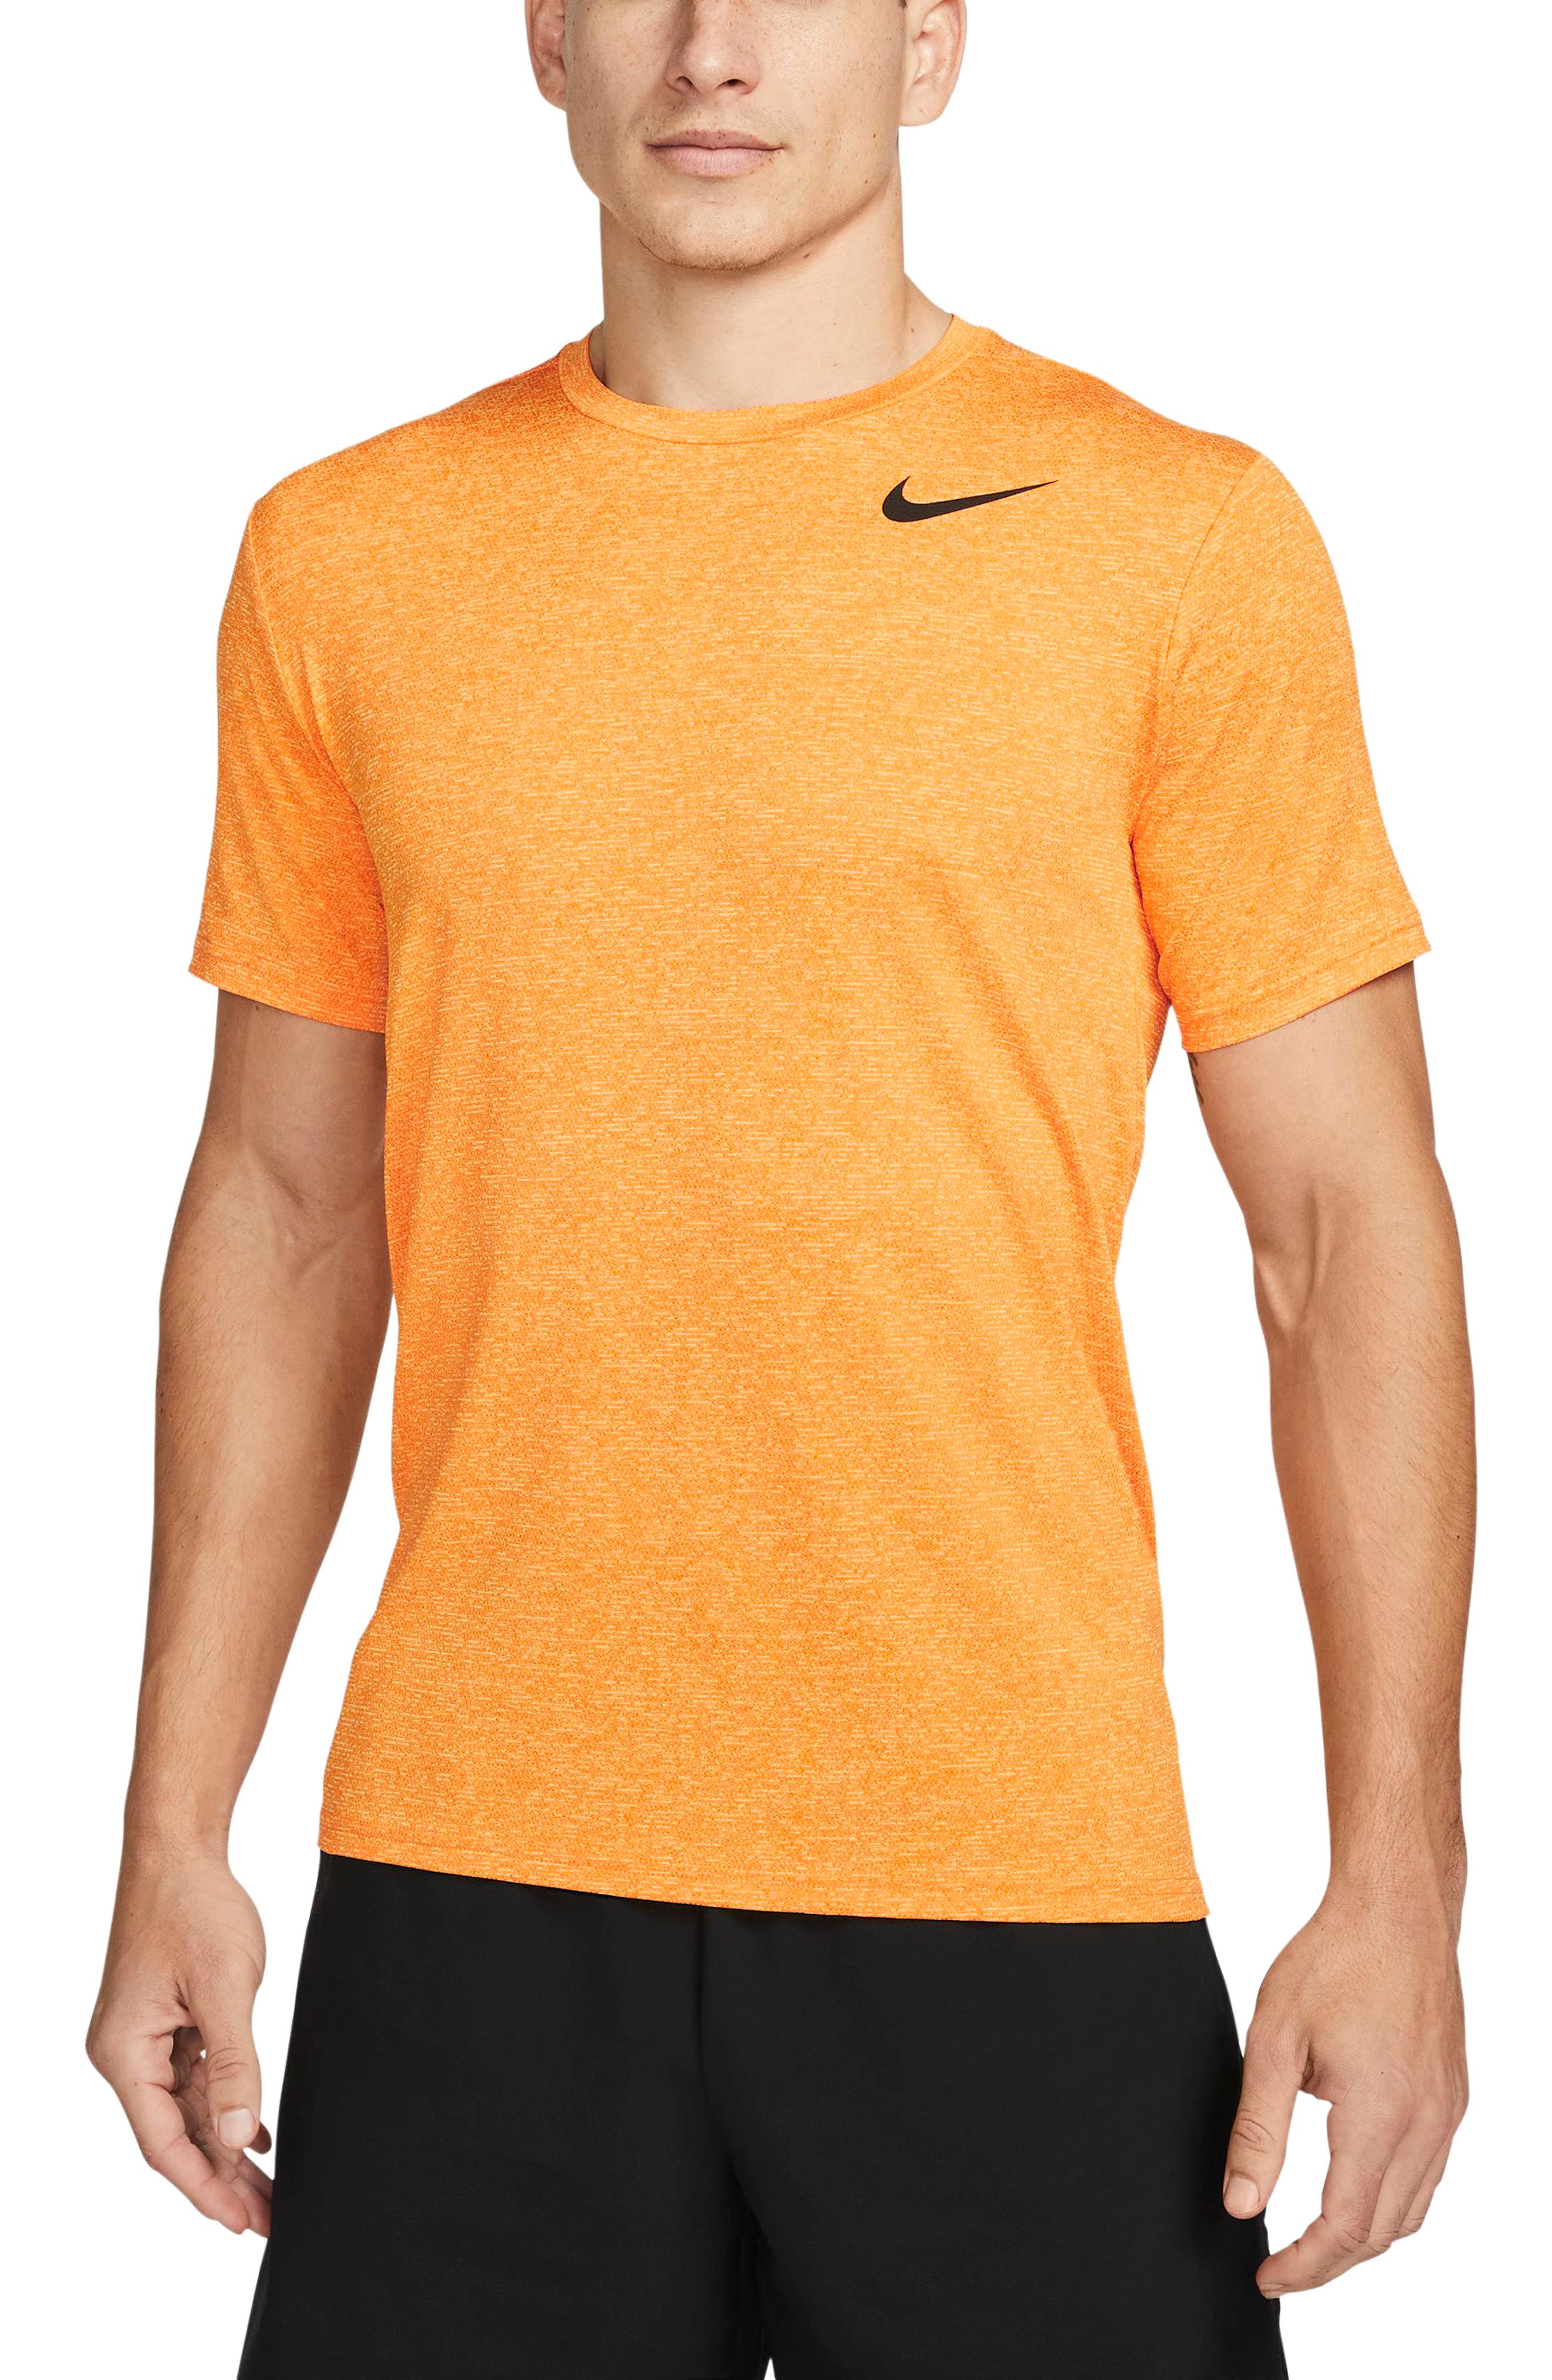 Watermelon Mens Casual Short Sleeve T Shirt Athletic Cotton Tee Orange 